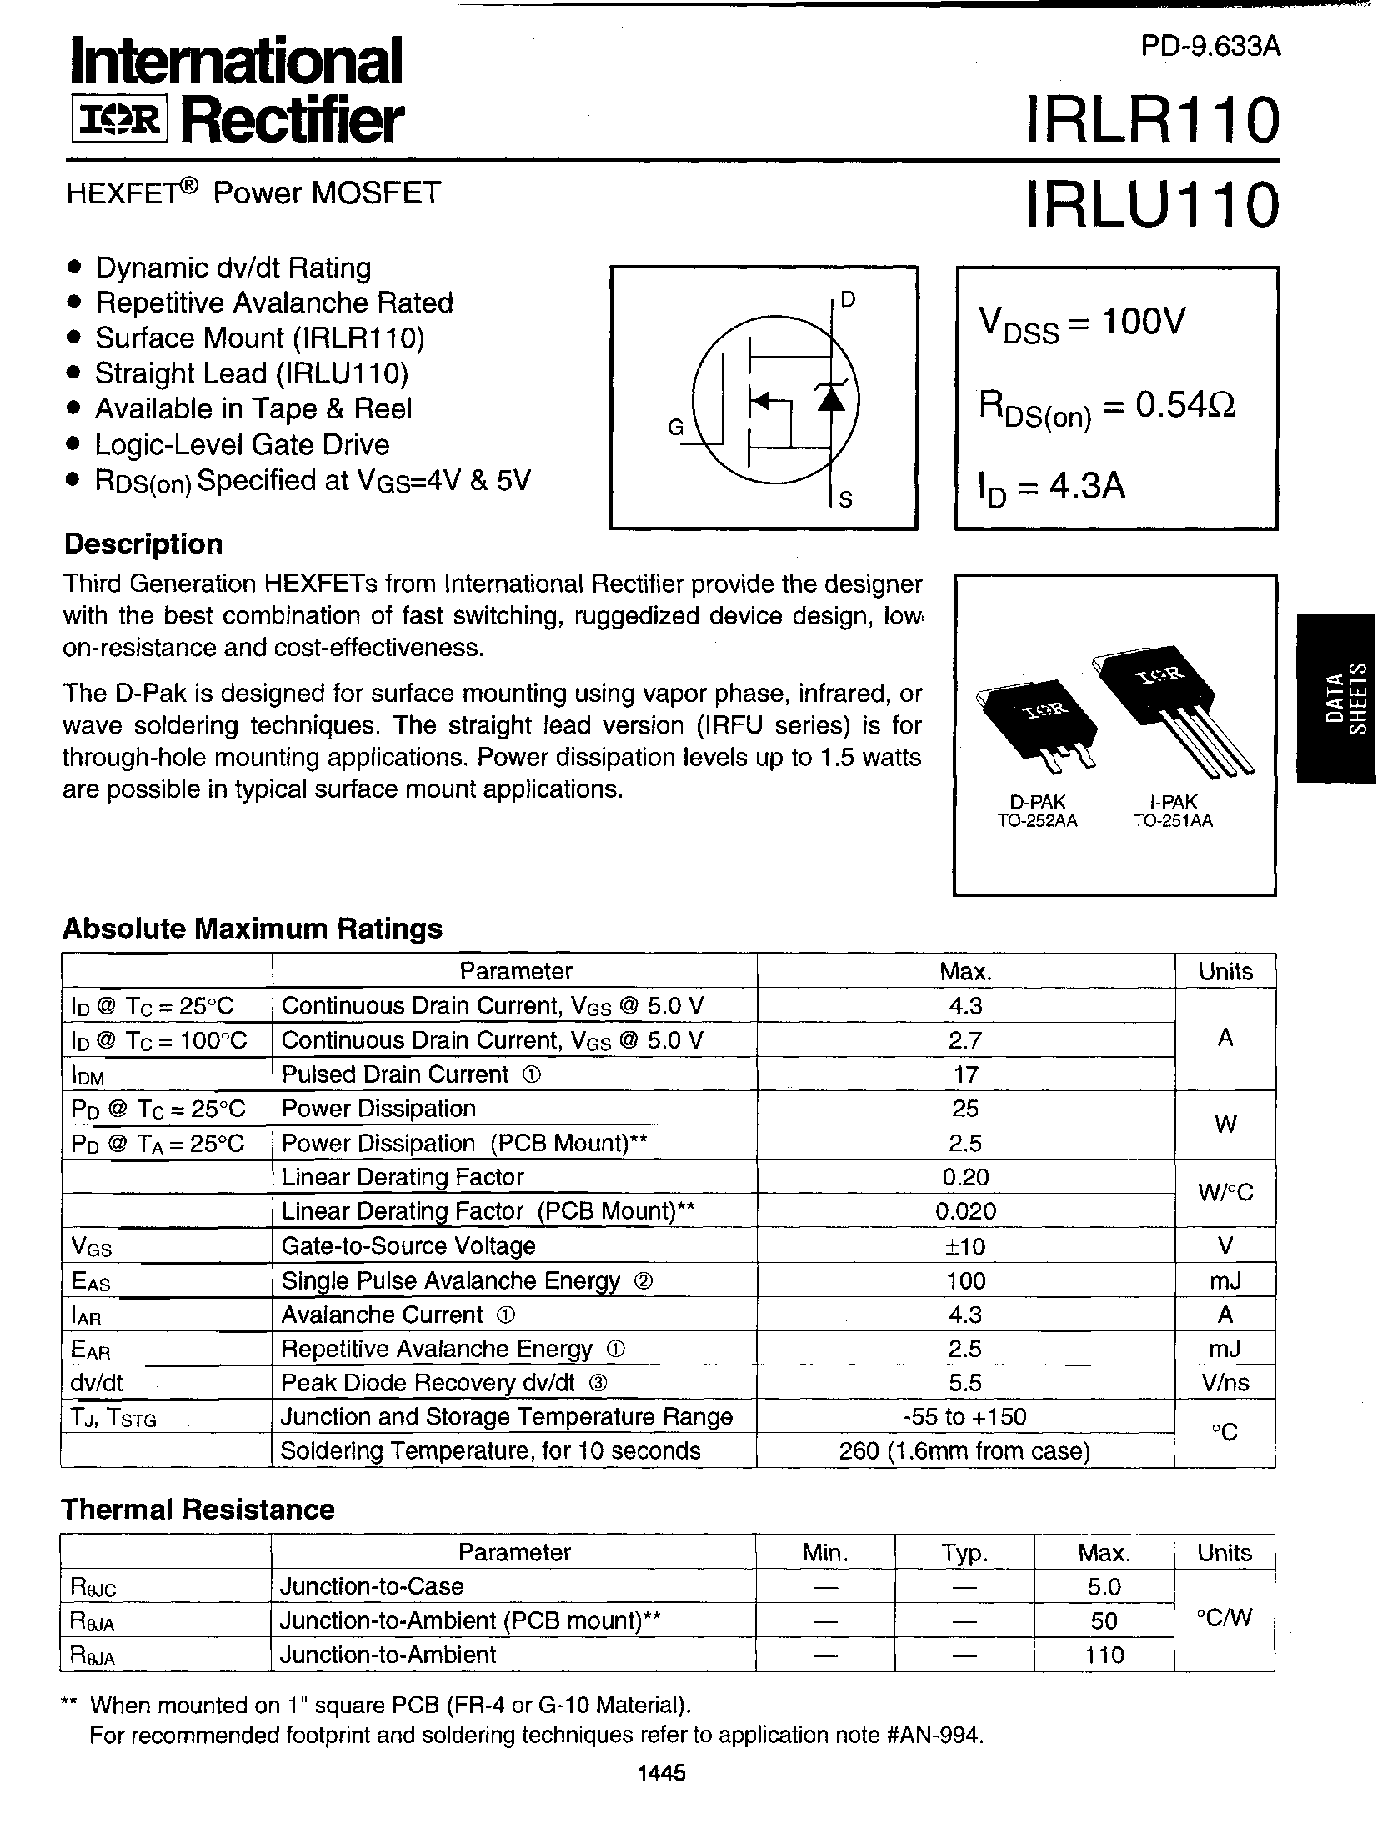 Datasheet IRLR110 - (IRLR110 / IRLU110) POWER MOSFET page 1